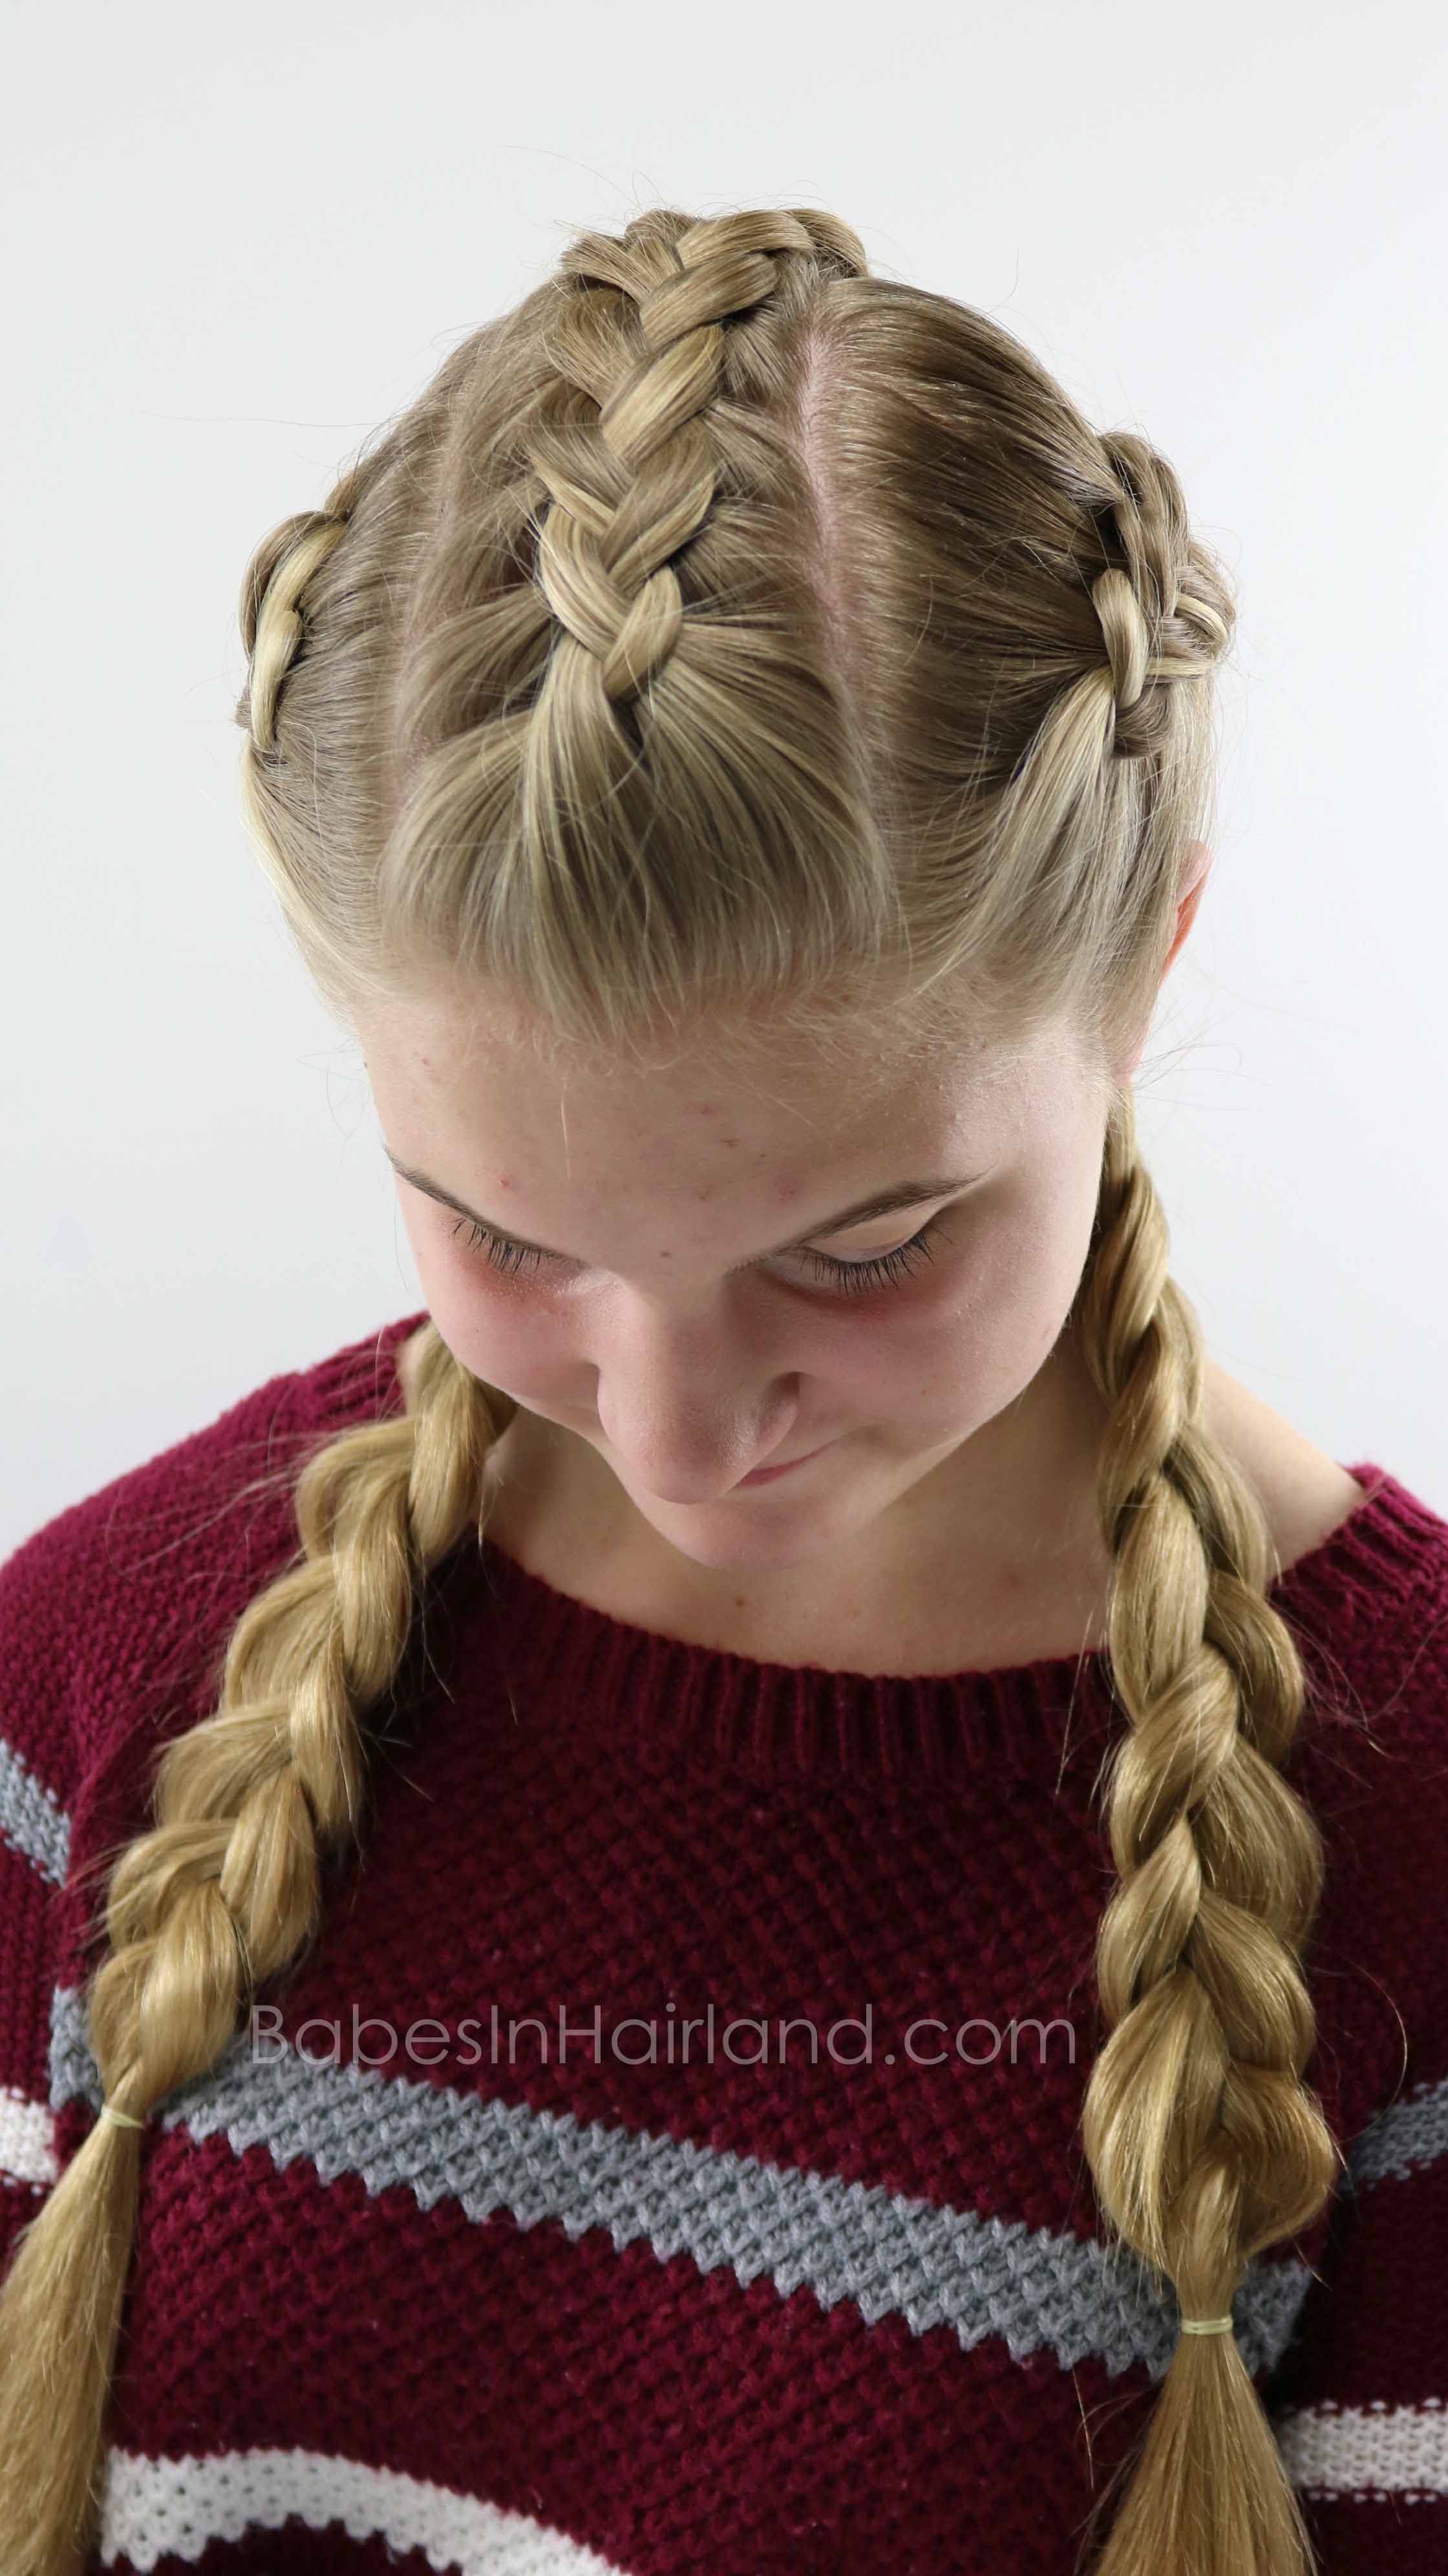 Triple Double Dutch Braids Hairstyle Beautiful School